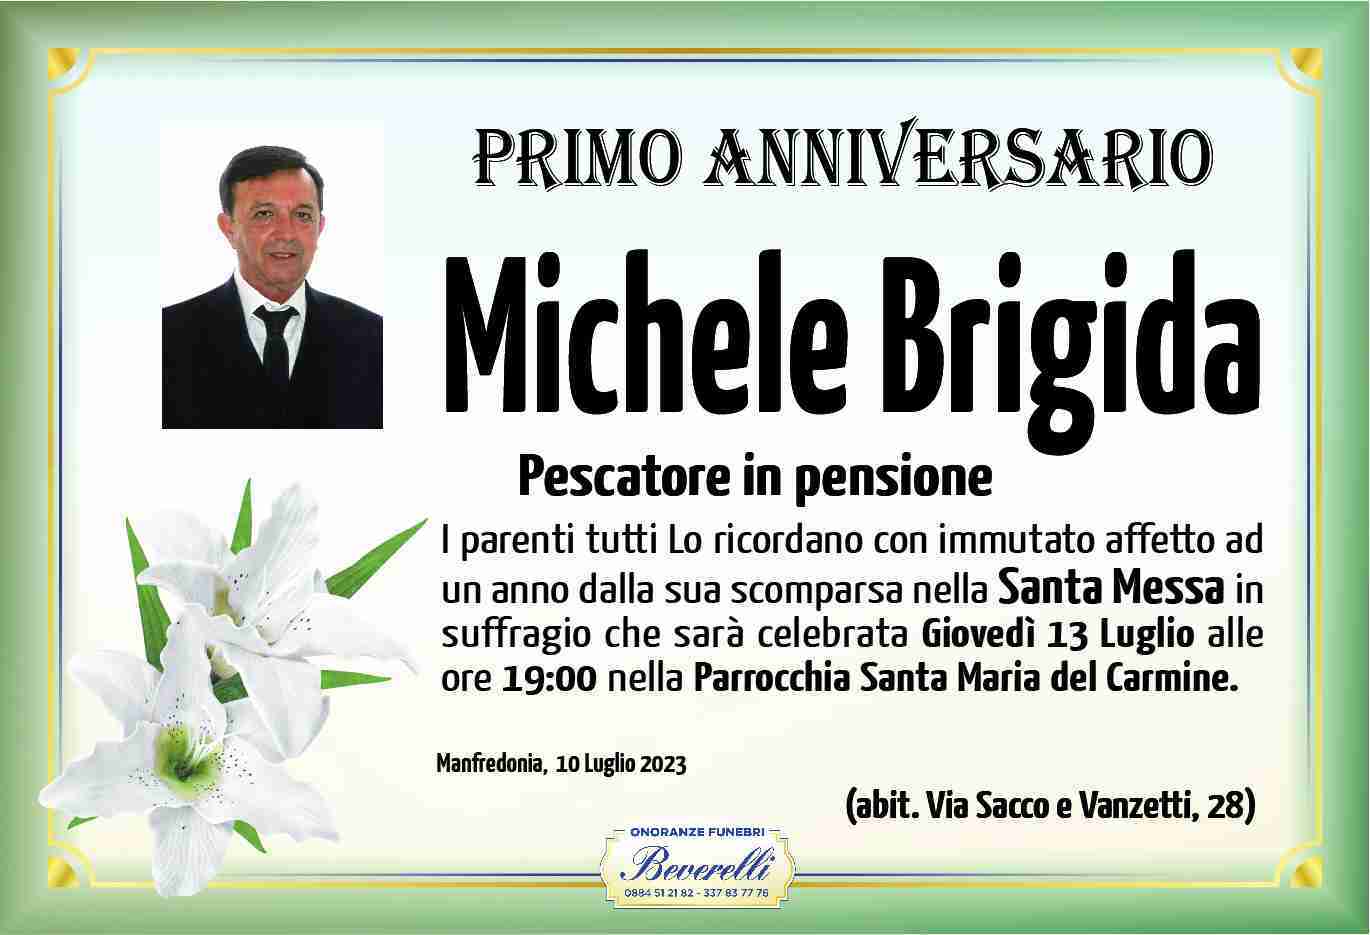 Michele Brigida